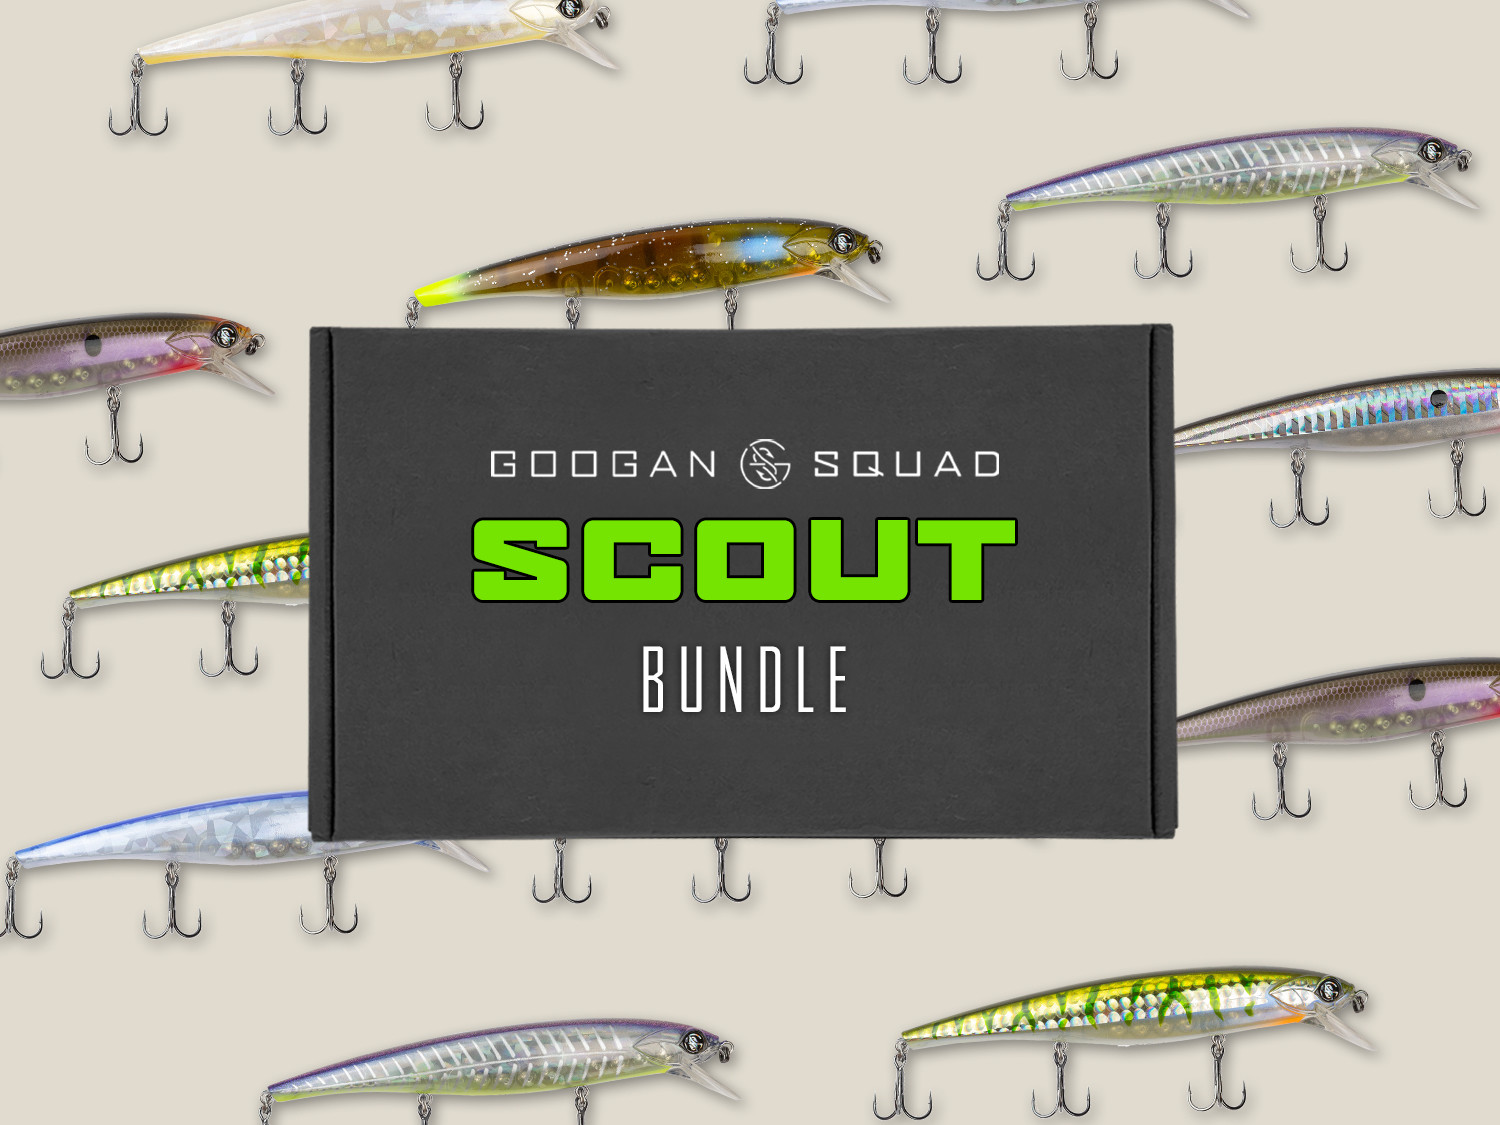 Scout – Googan Squad